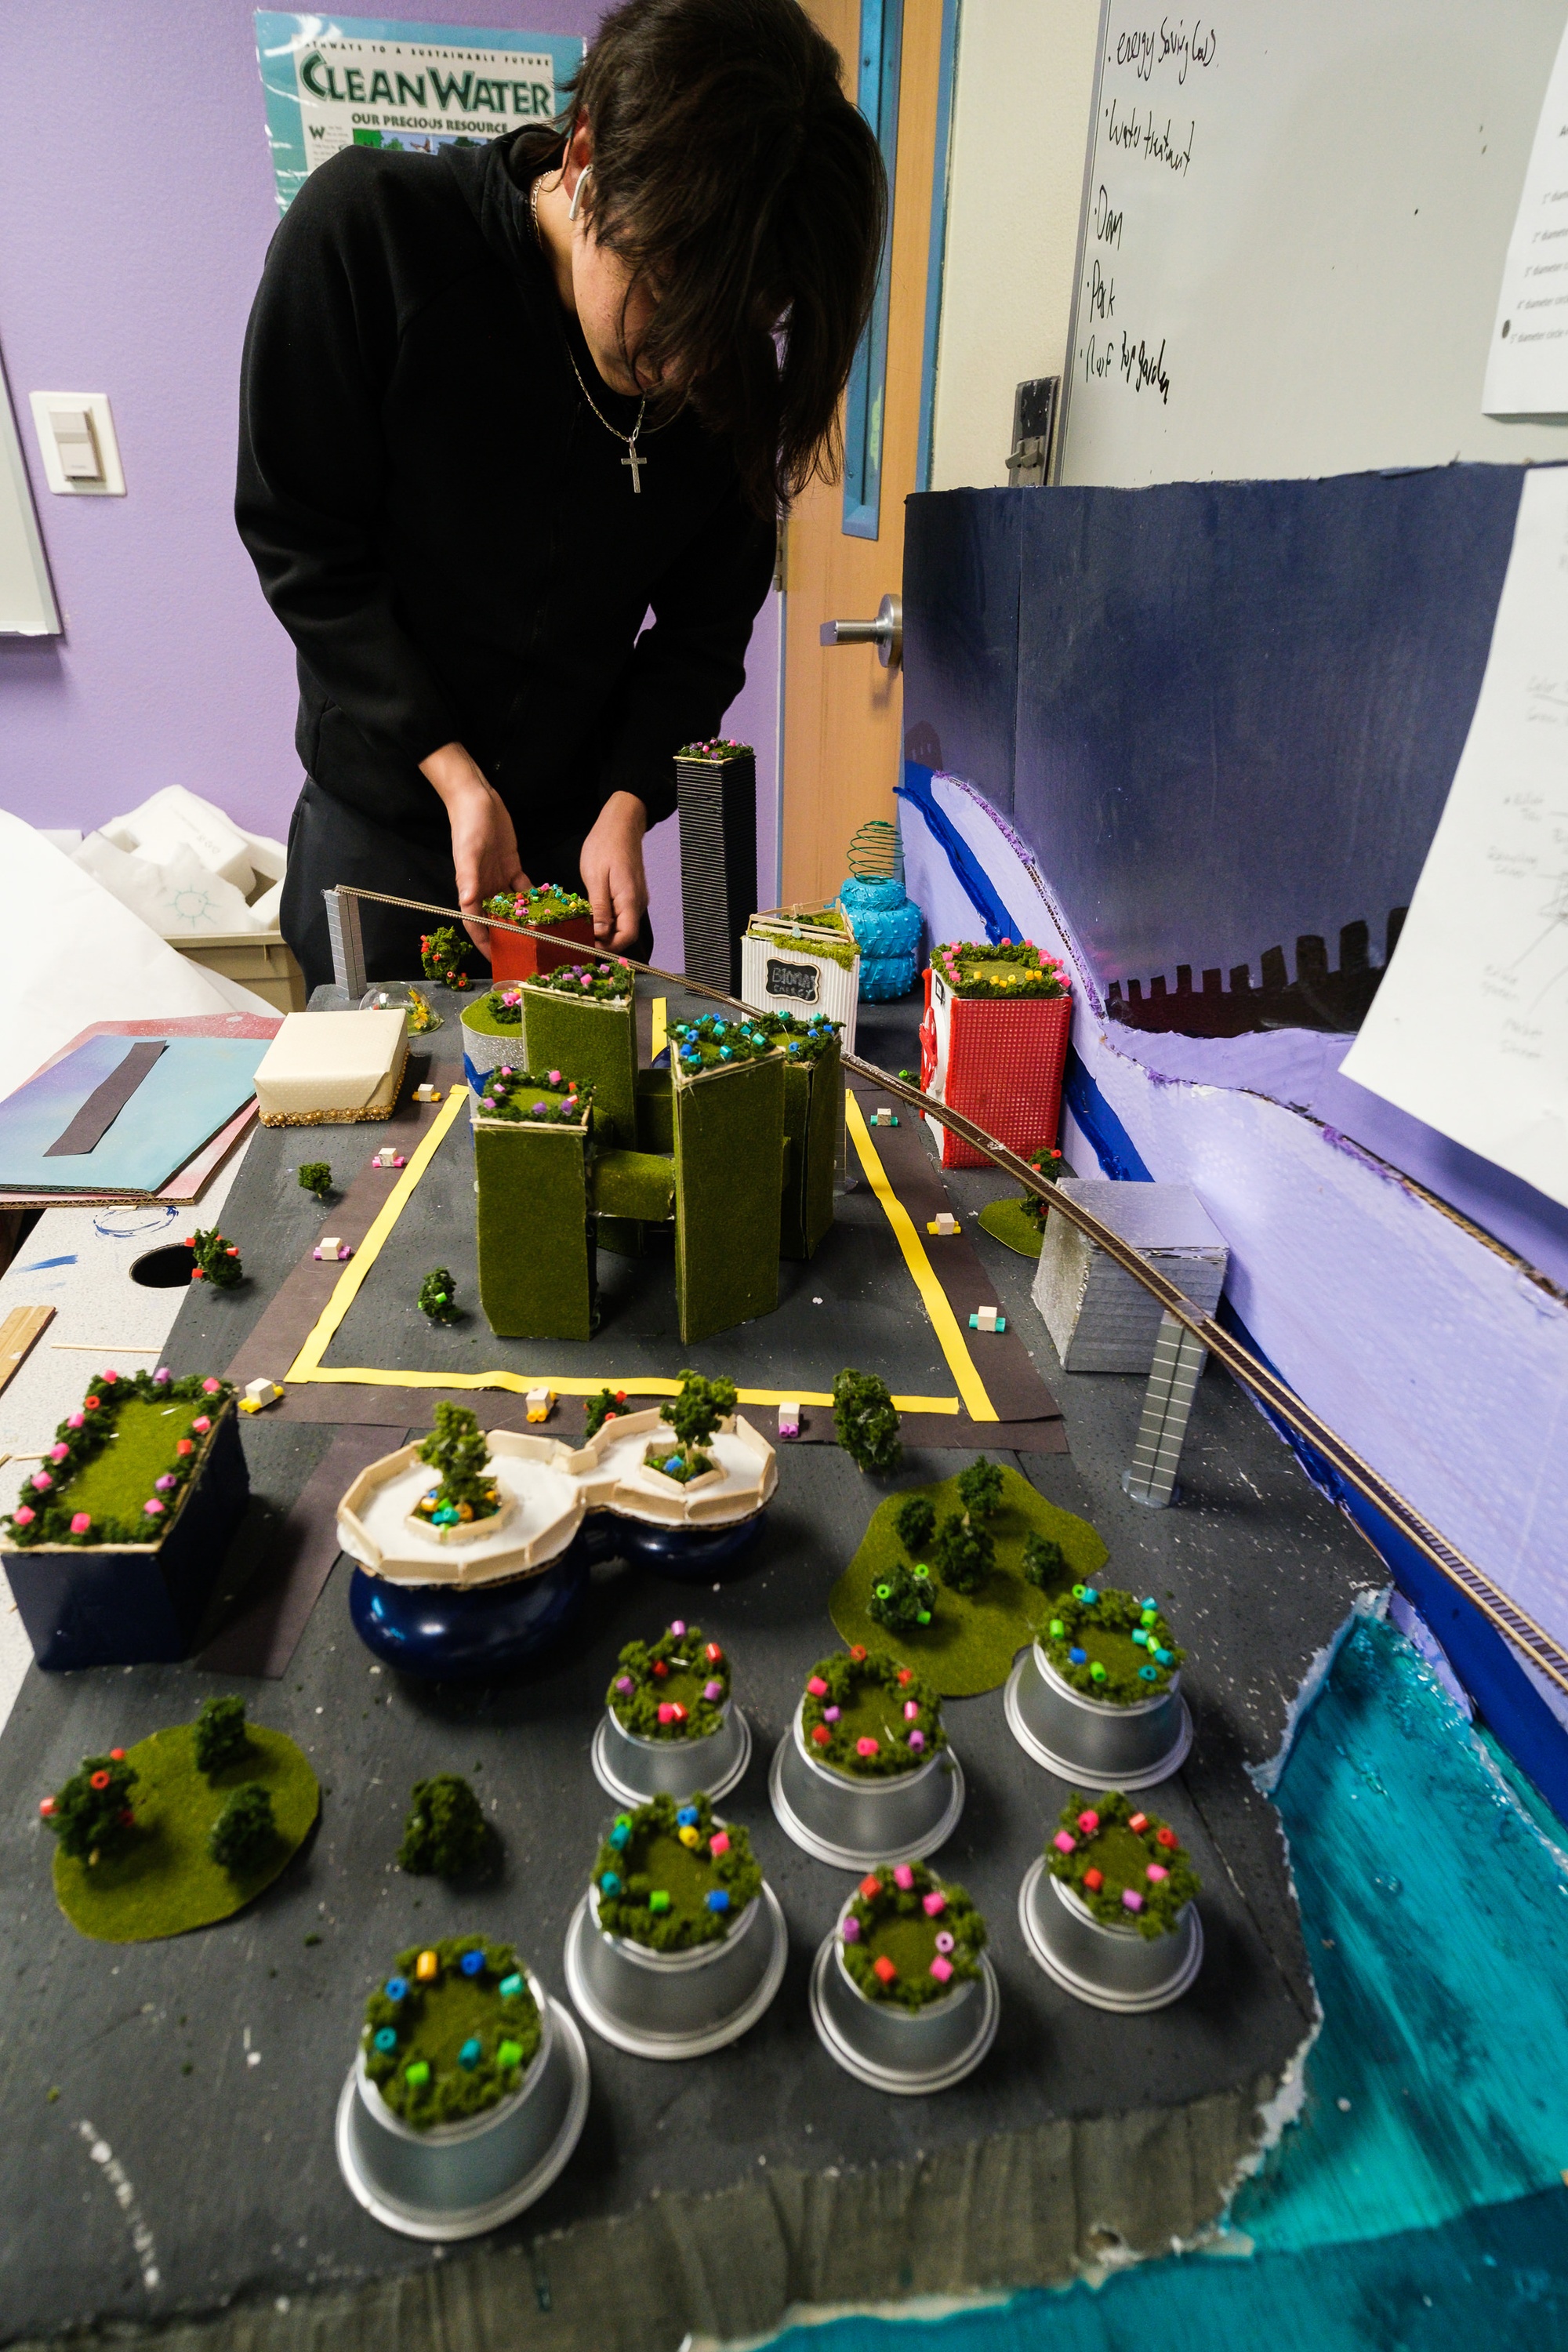 Student building a model future city